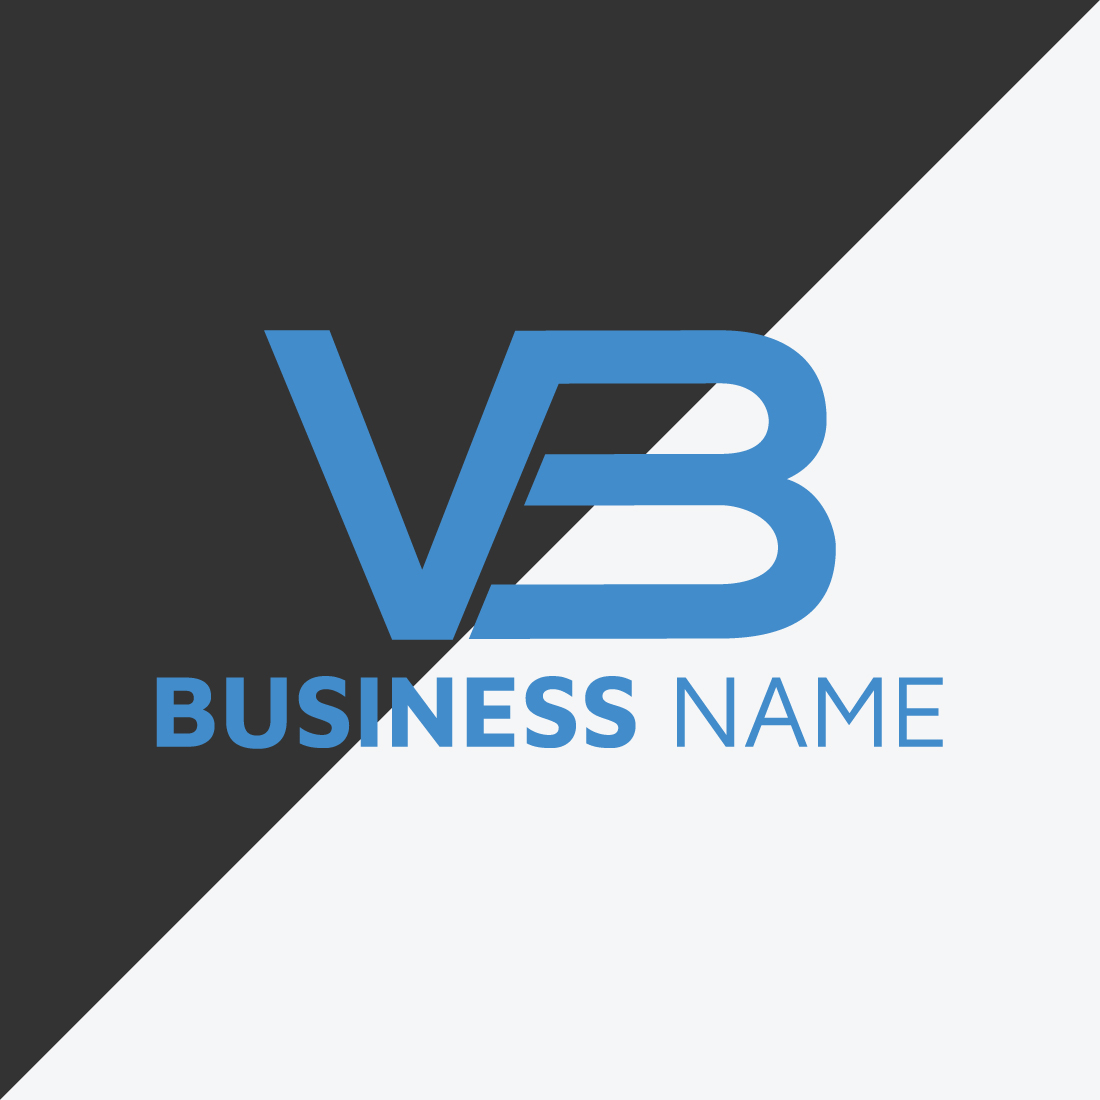 Professional VB letter logo template design preview image.